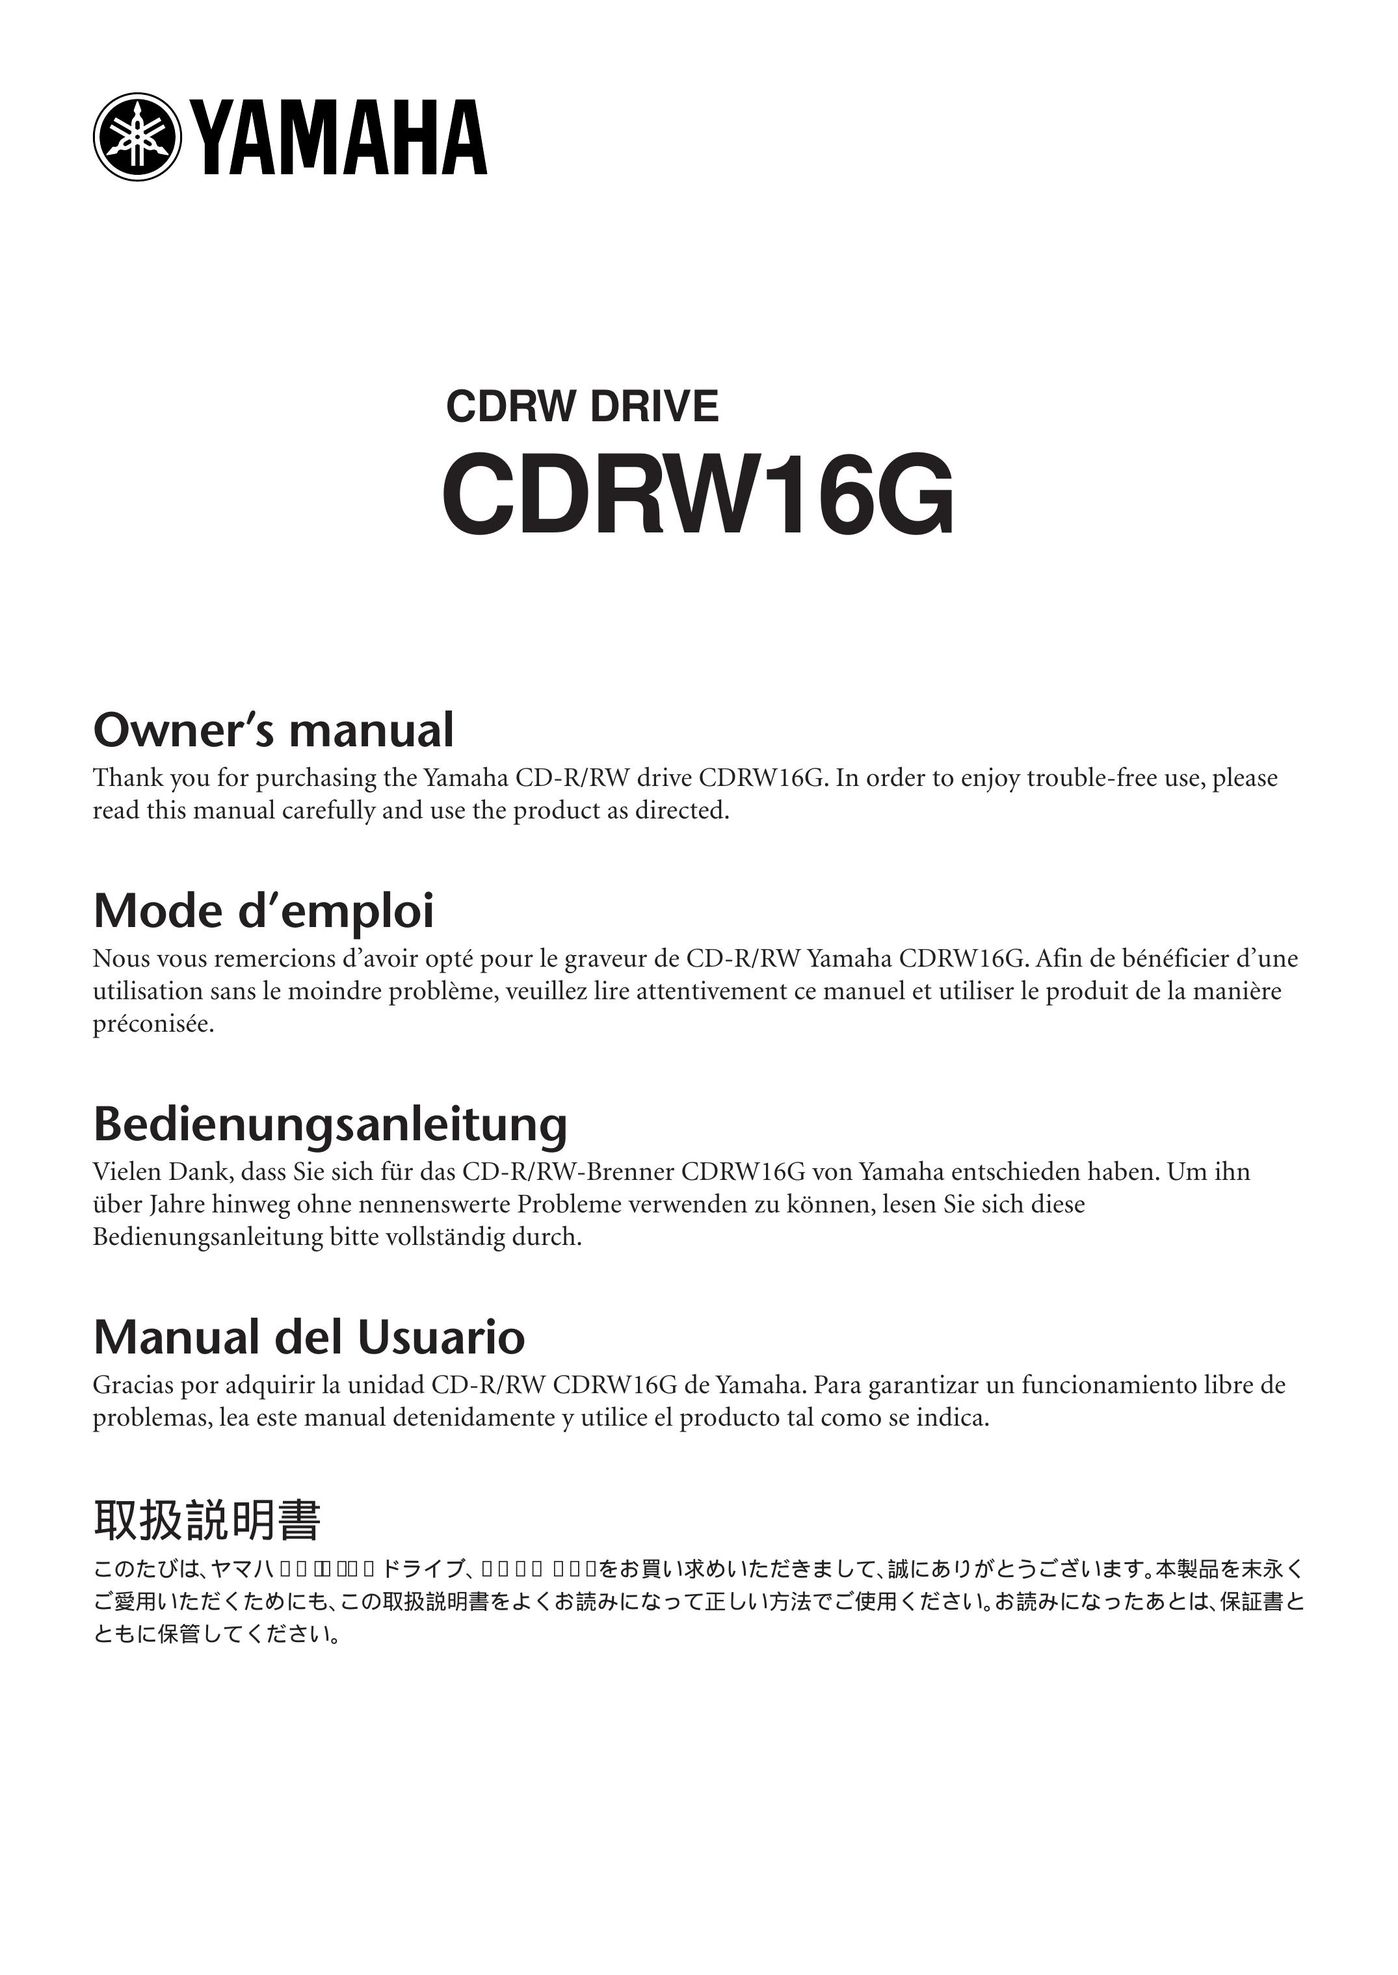 Yamaha CDRW16G Network Card User Manual